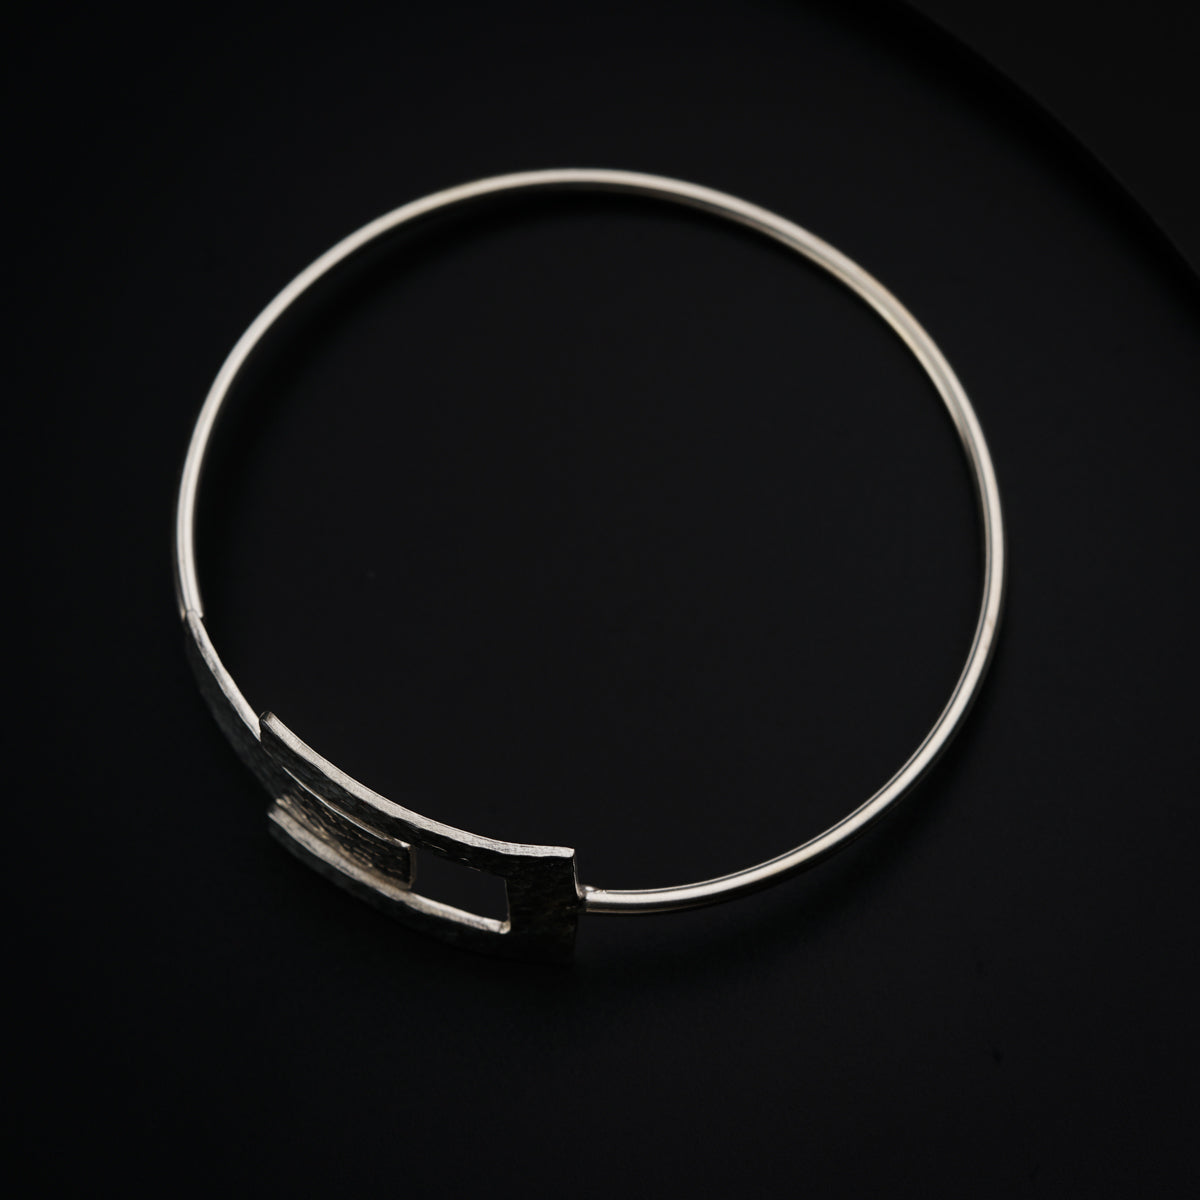 a close up of a metal bracelet on a black surface